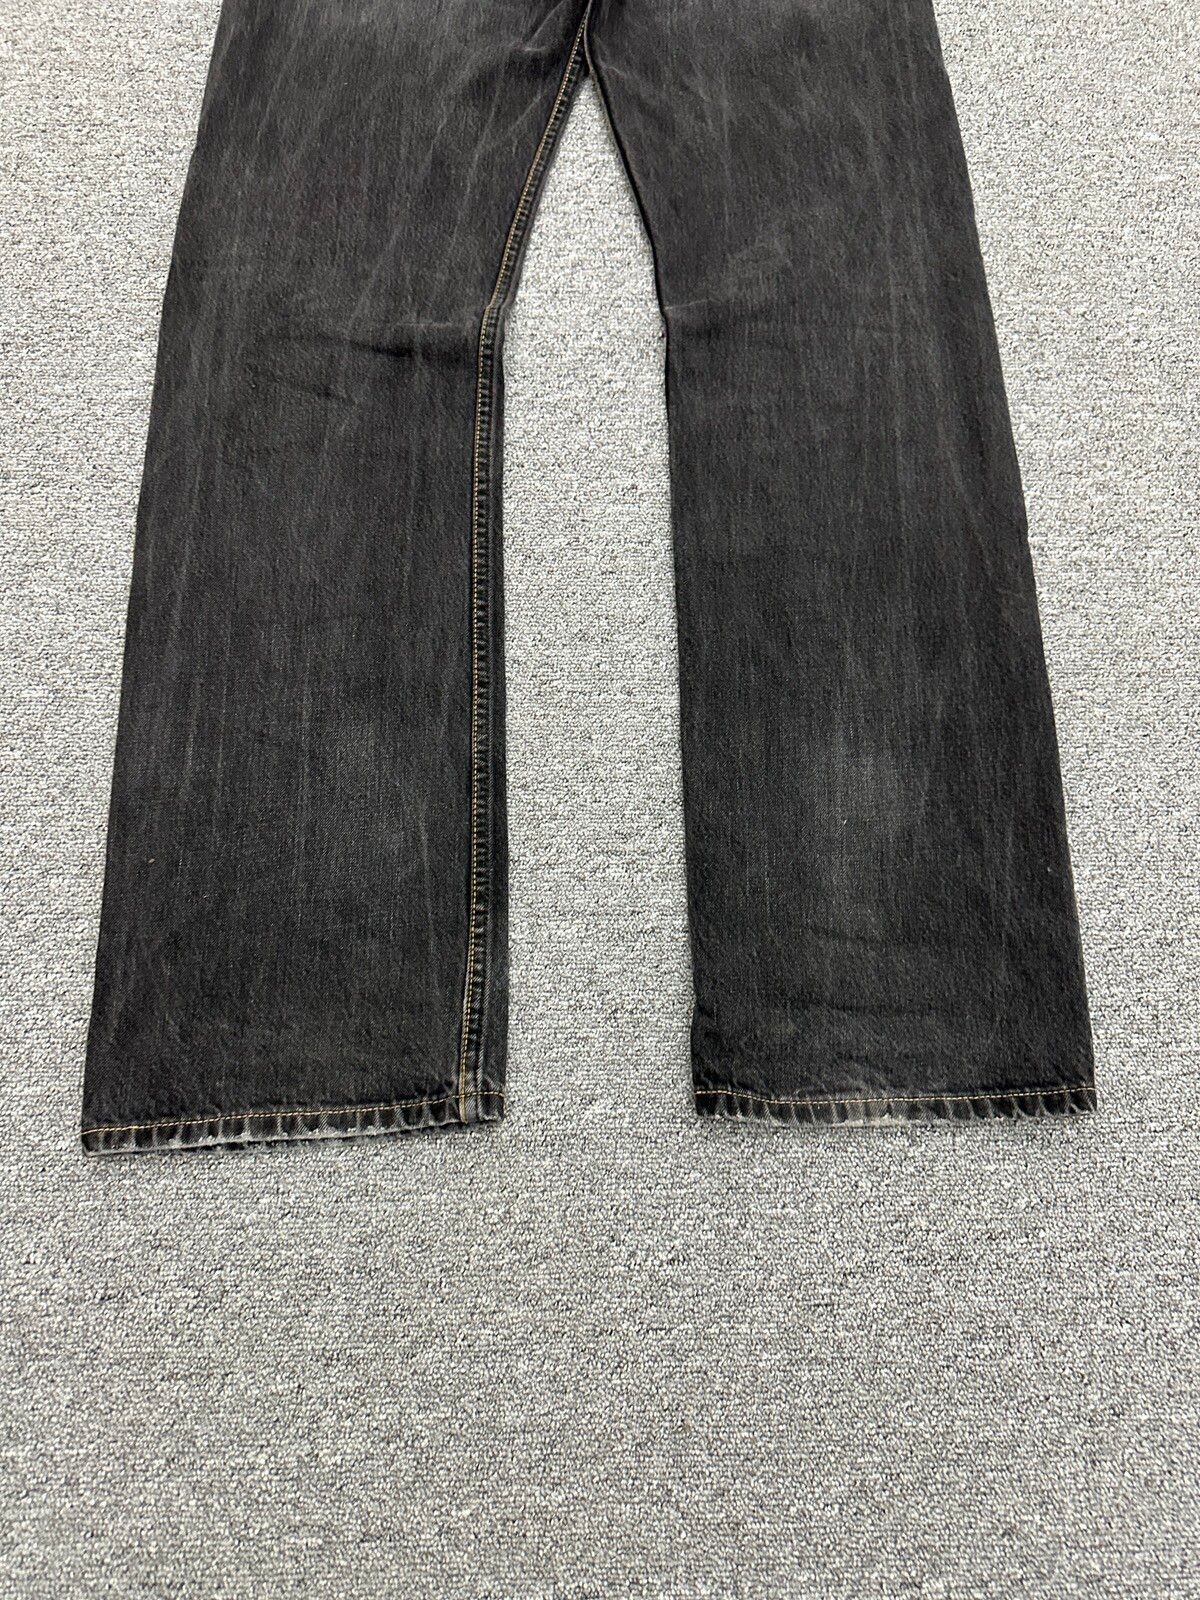 Vintage Vintage 501 Levi’s Faded Black Denim Pants Size US 32 / EU 48 - 5 Thumbnail